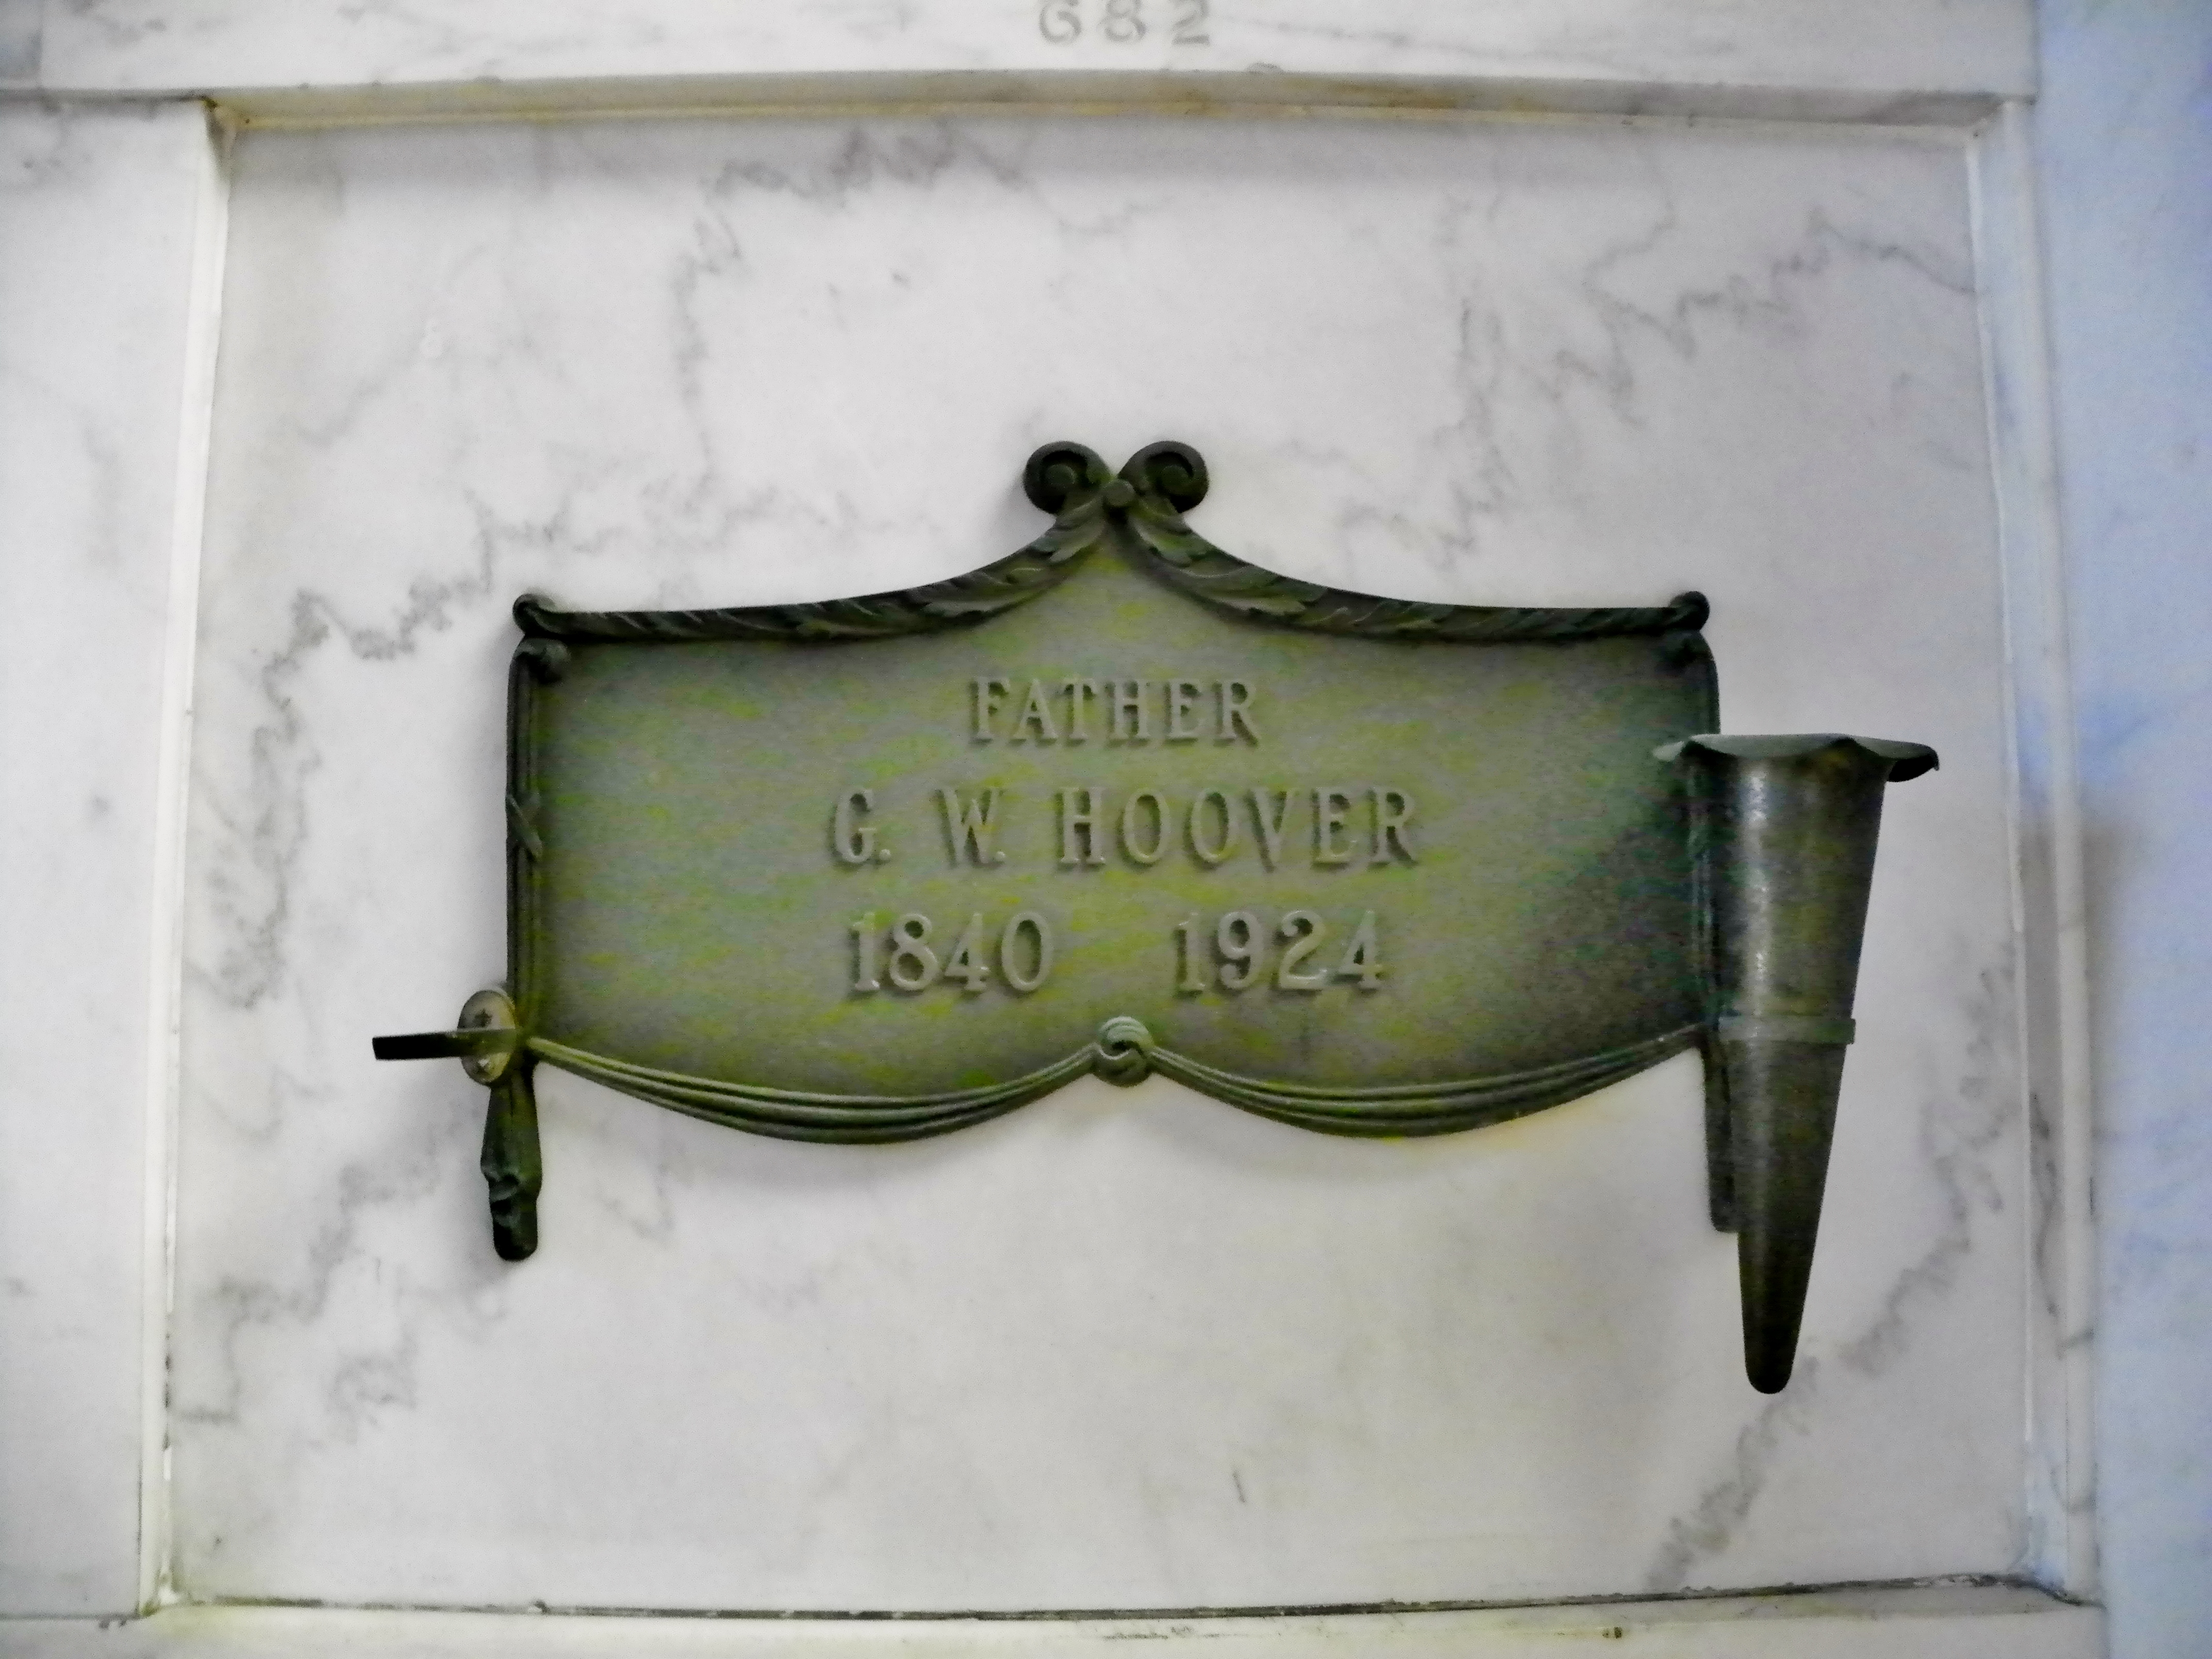 George W. Hoover